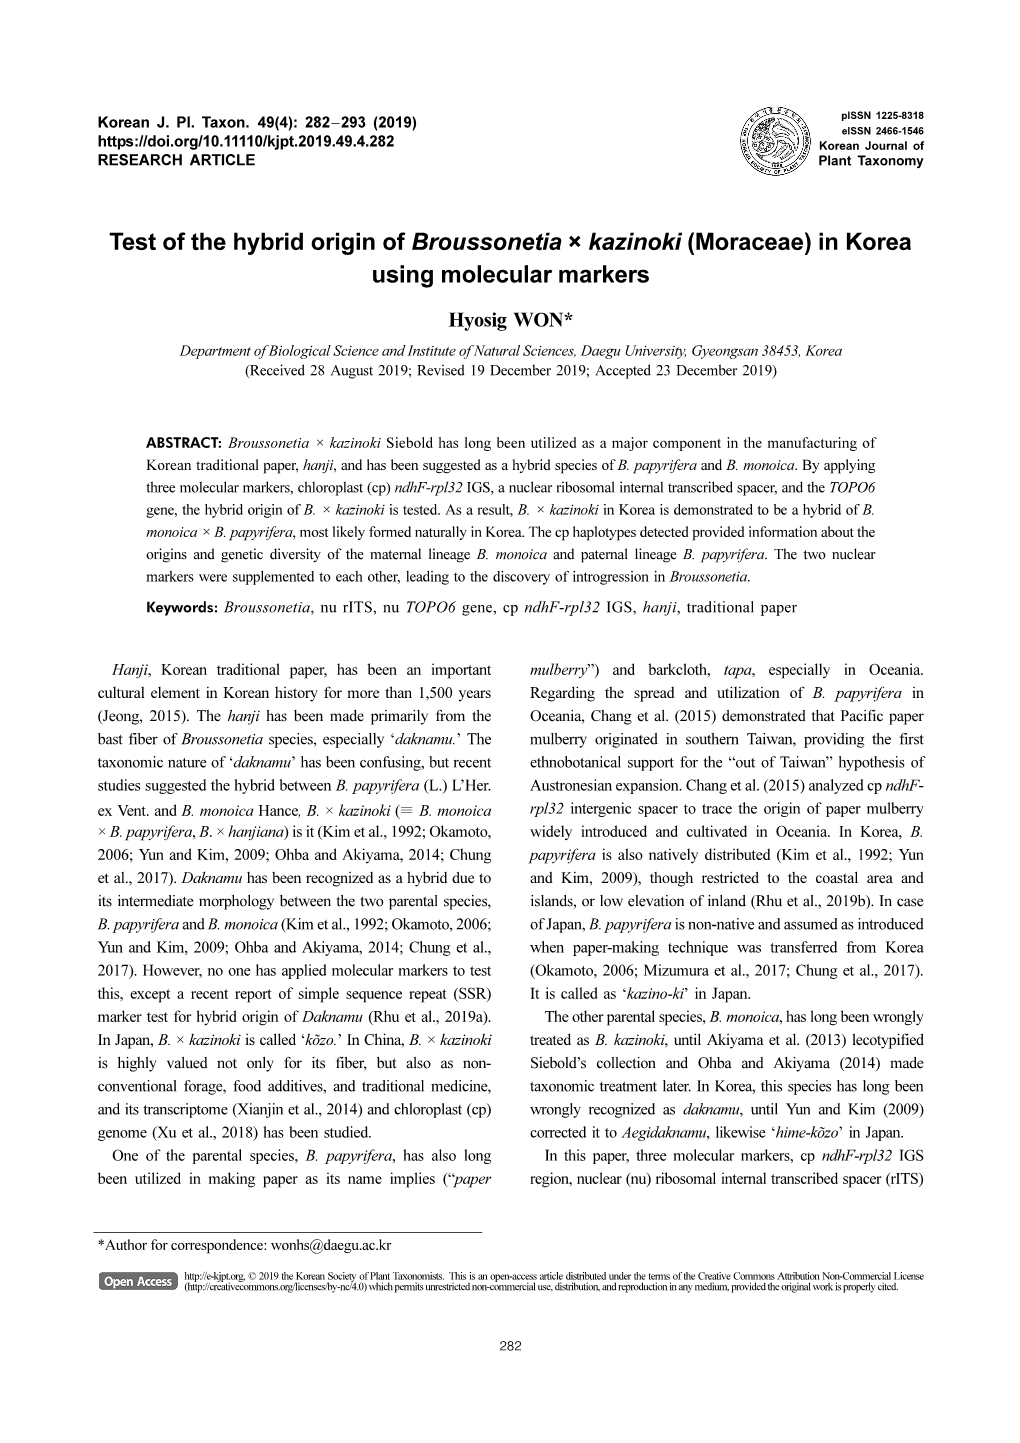 Test of the Hybrid Origin of Broussonetia × Kazinoki (Moraceae) in Korea Using Molecular Markers